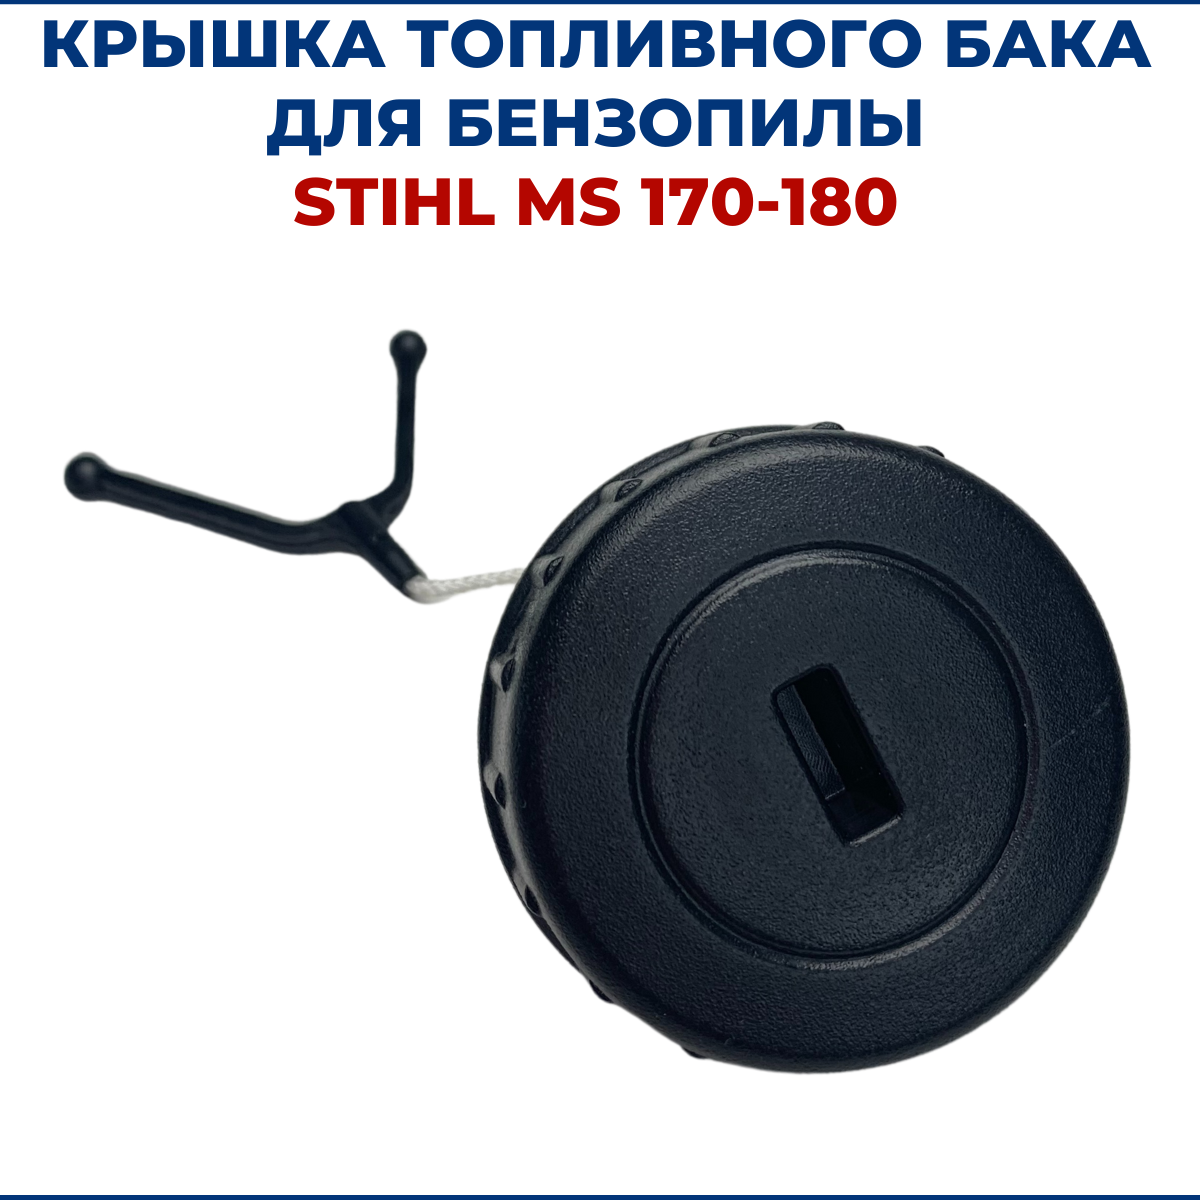 Крышка топливного бака для бензопилы STIHL MS 170-180